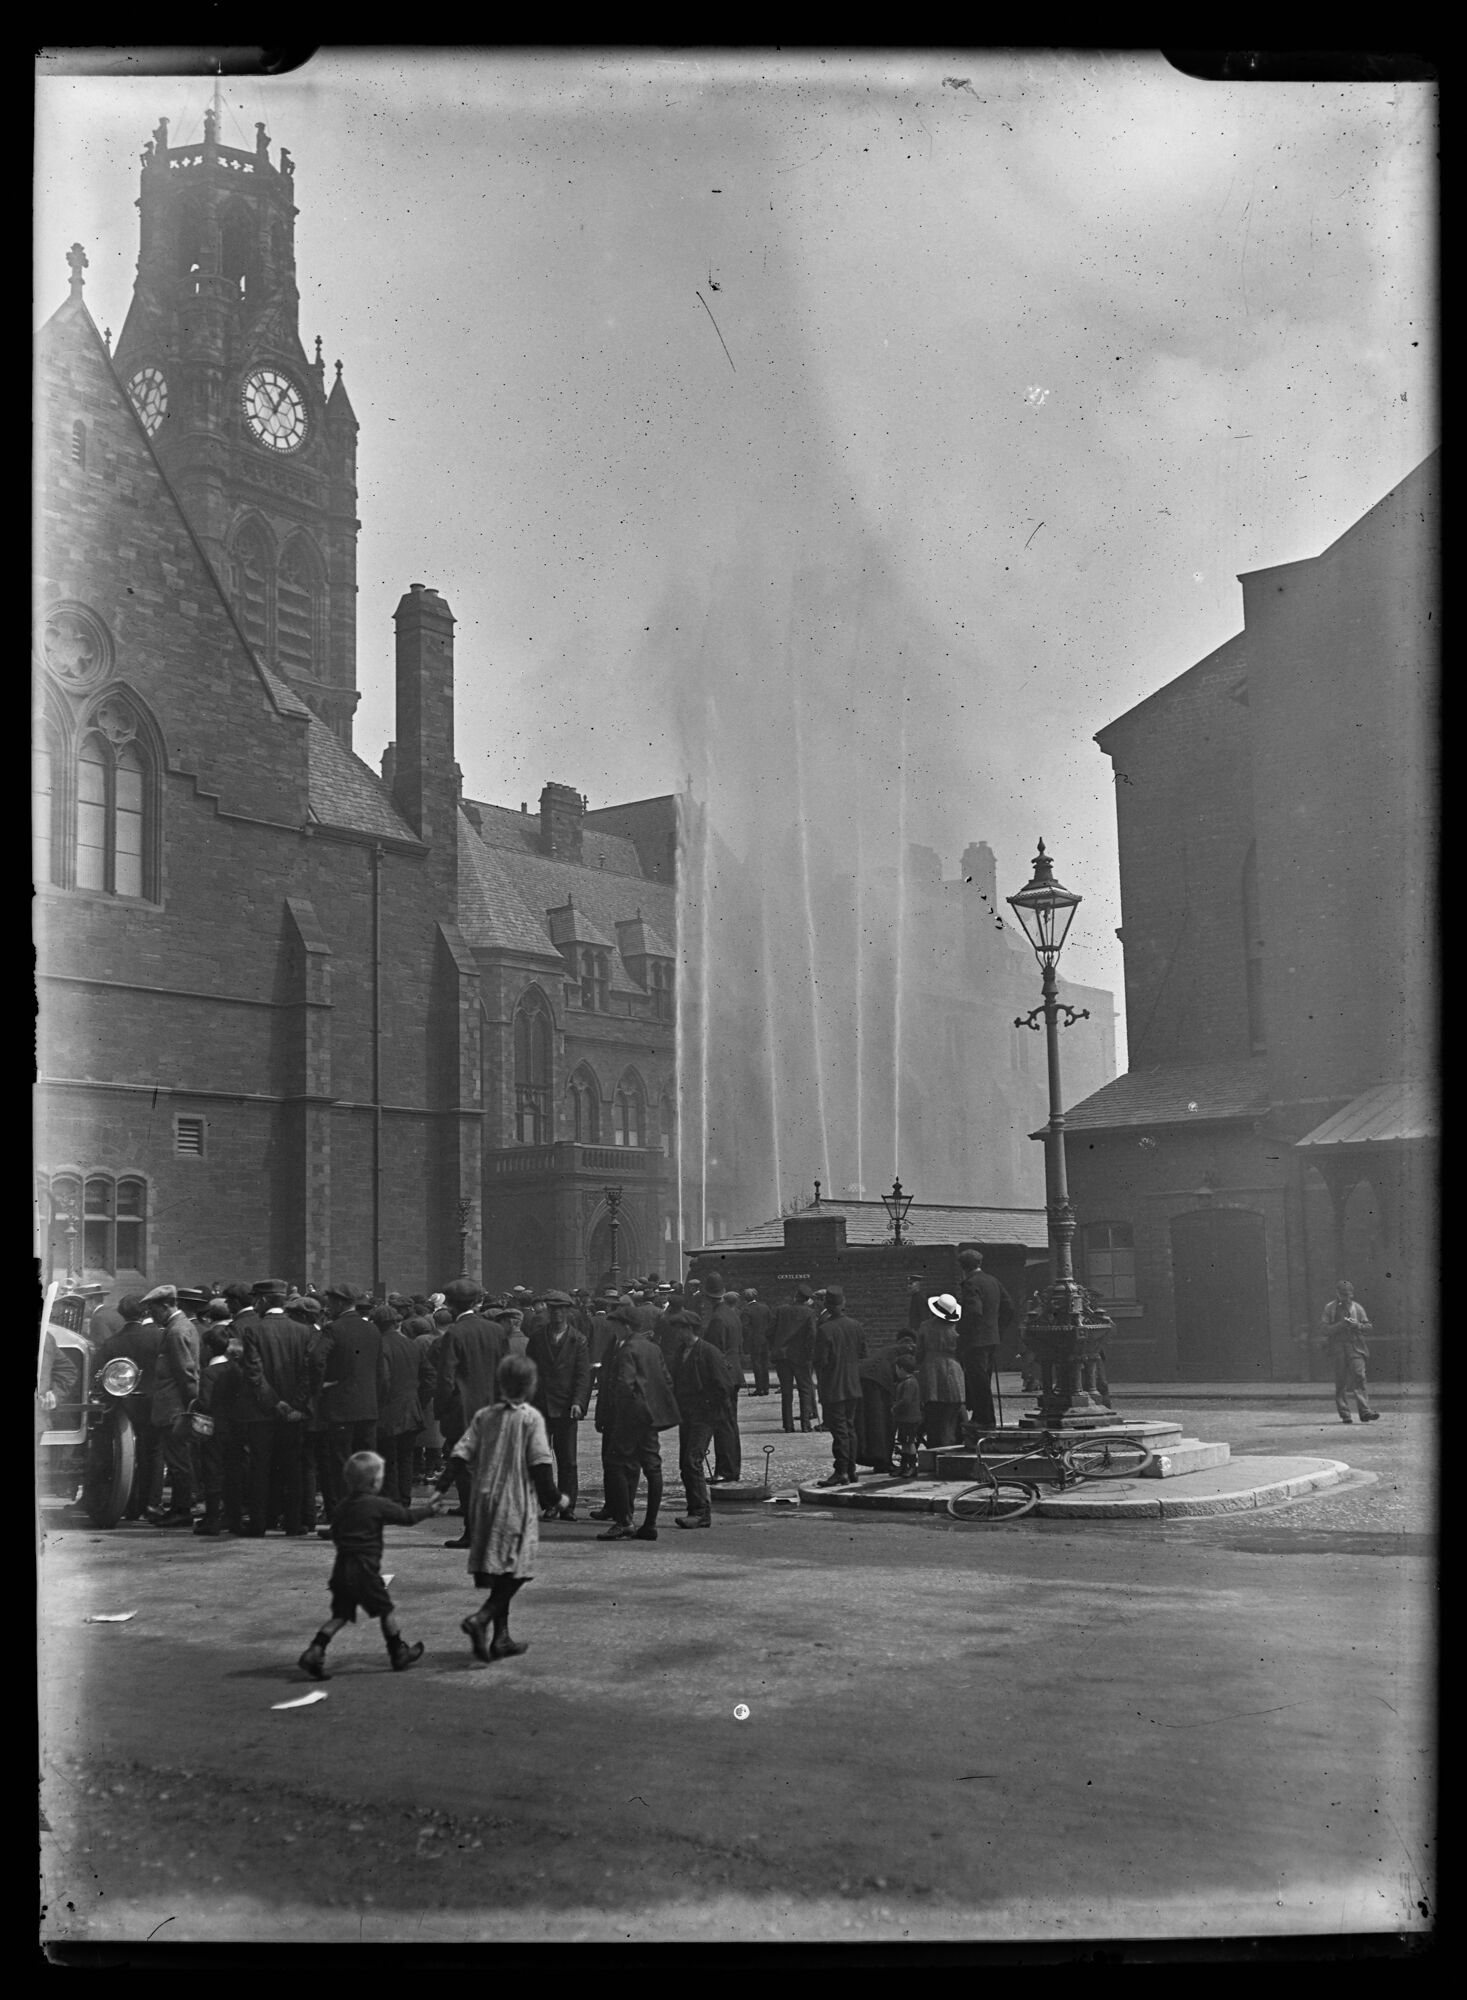 Fire Drill Back of Barrow Town Hall, Barrow-in-Furness